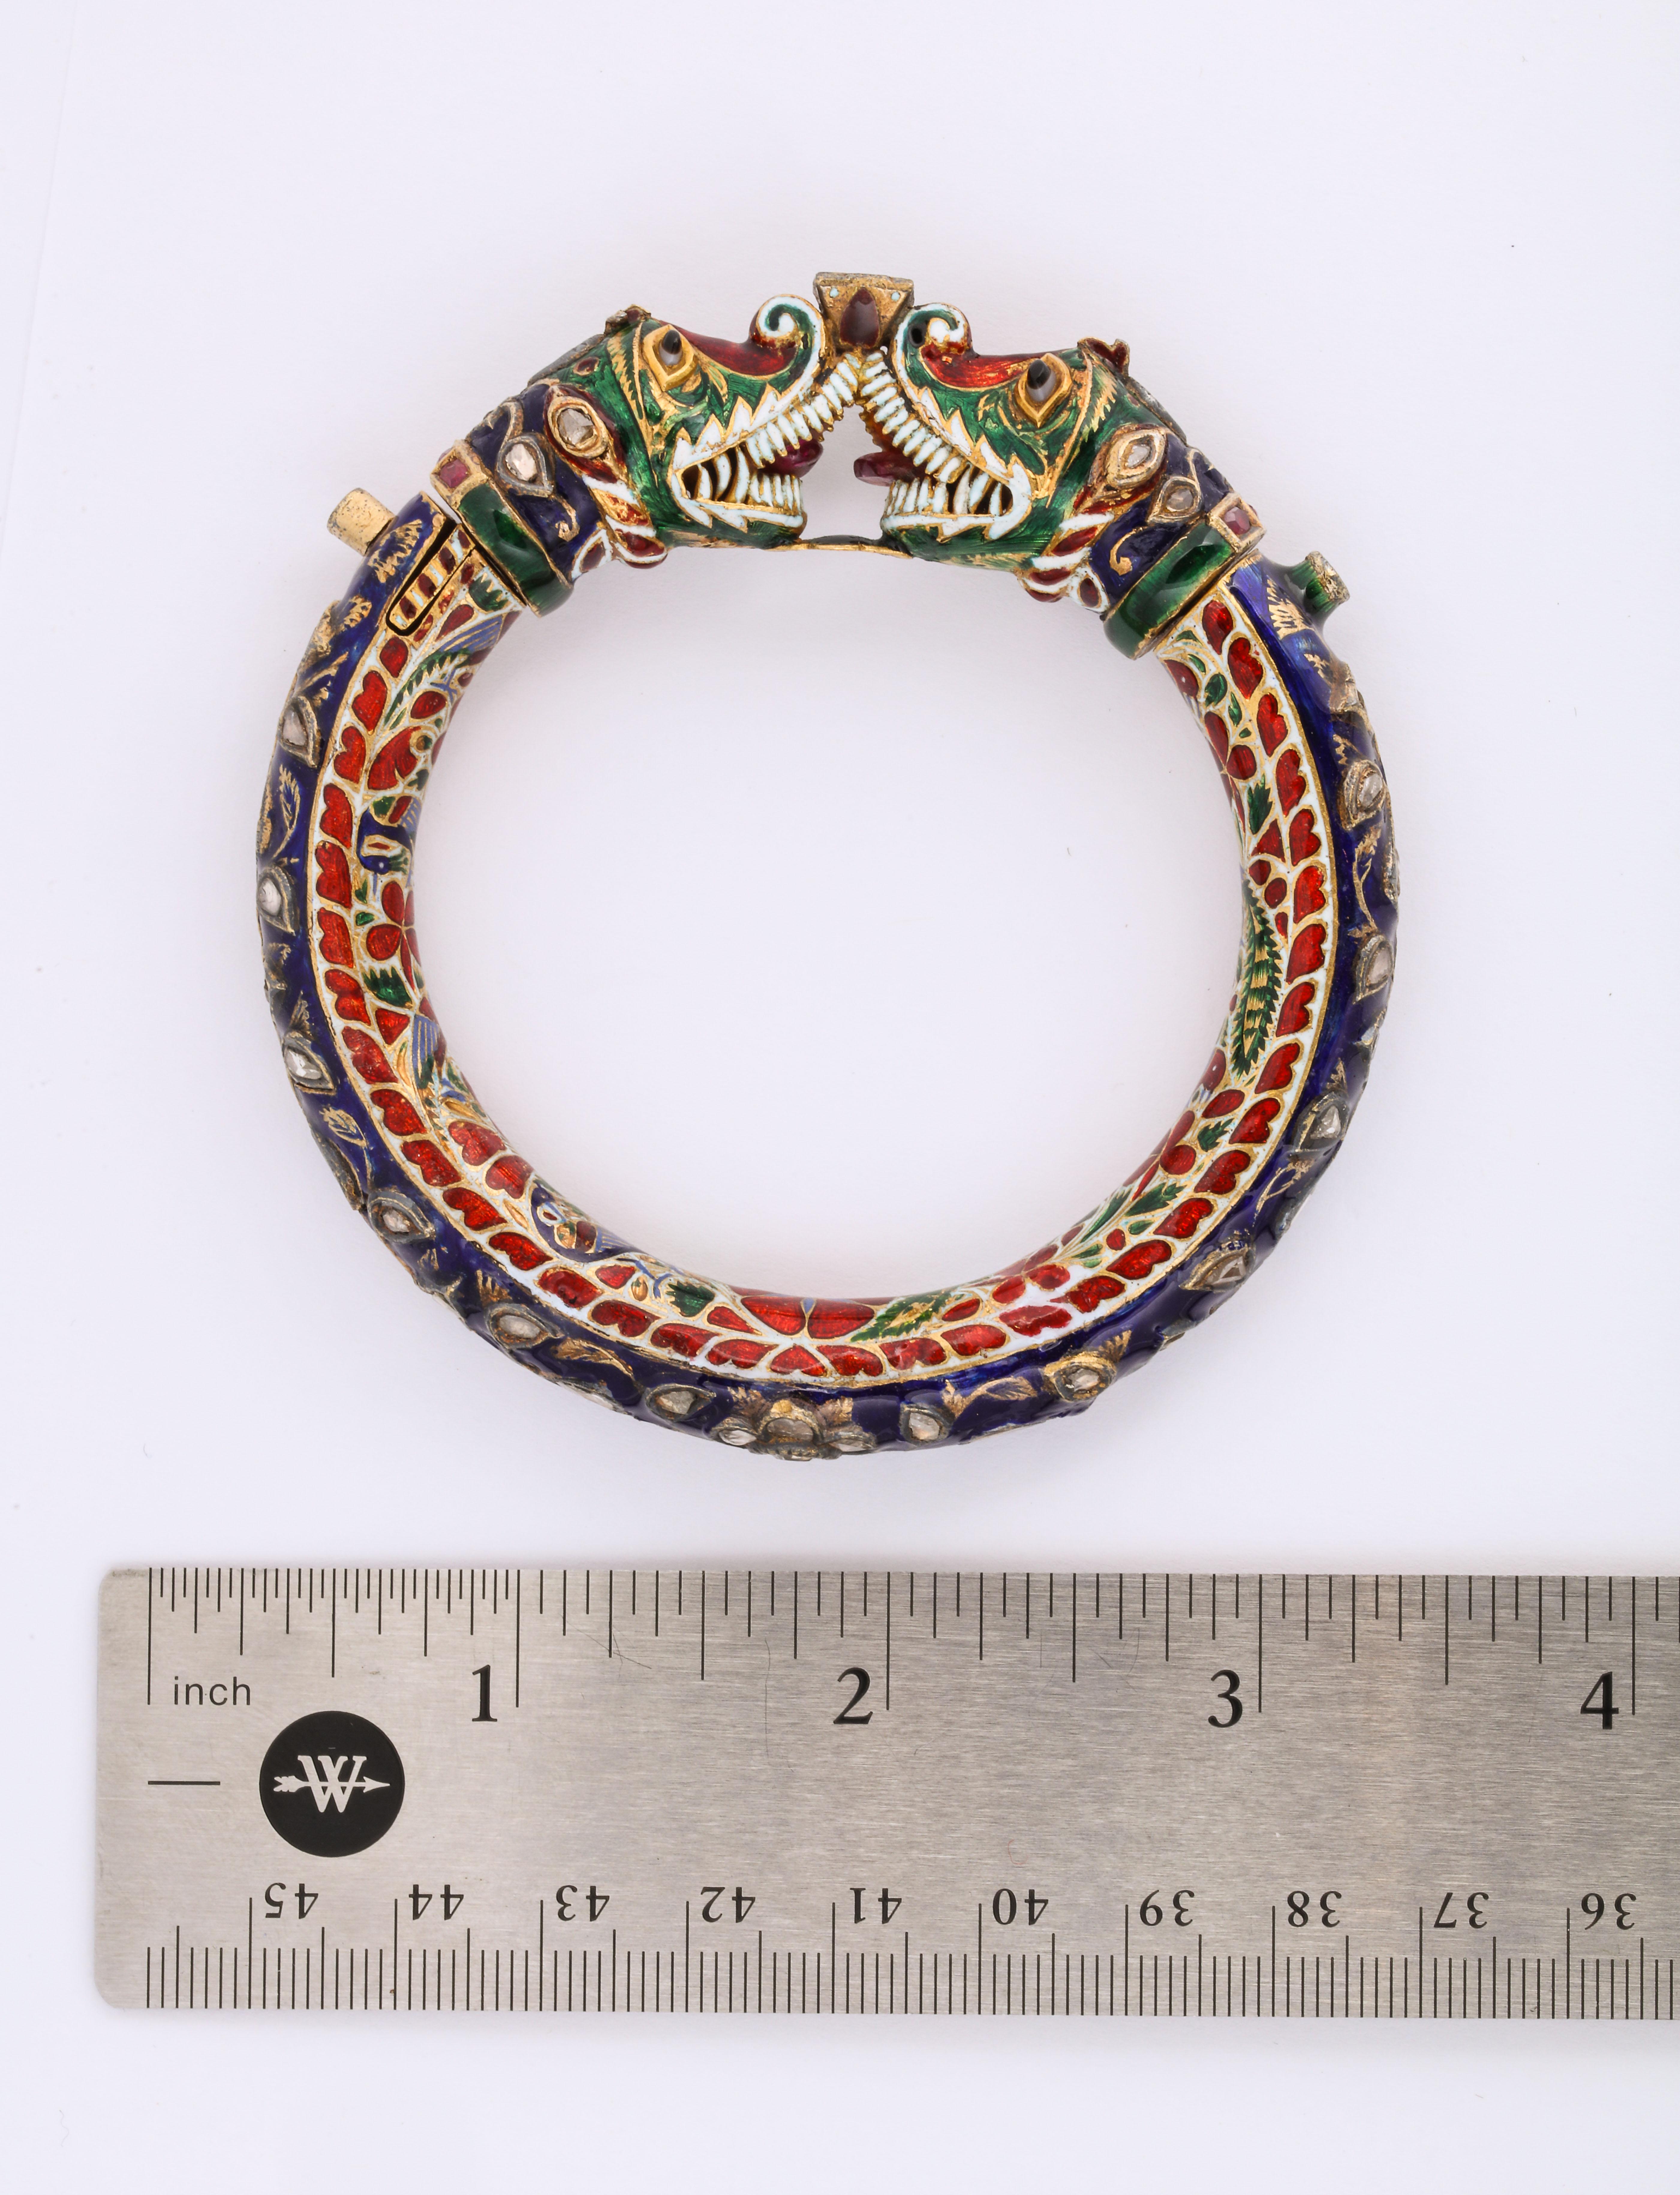 Exceptional 19th century Antique hand painted enamel and rose cut diamond bangle bracelet

Made circa 1850

22 Karat gold